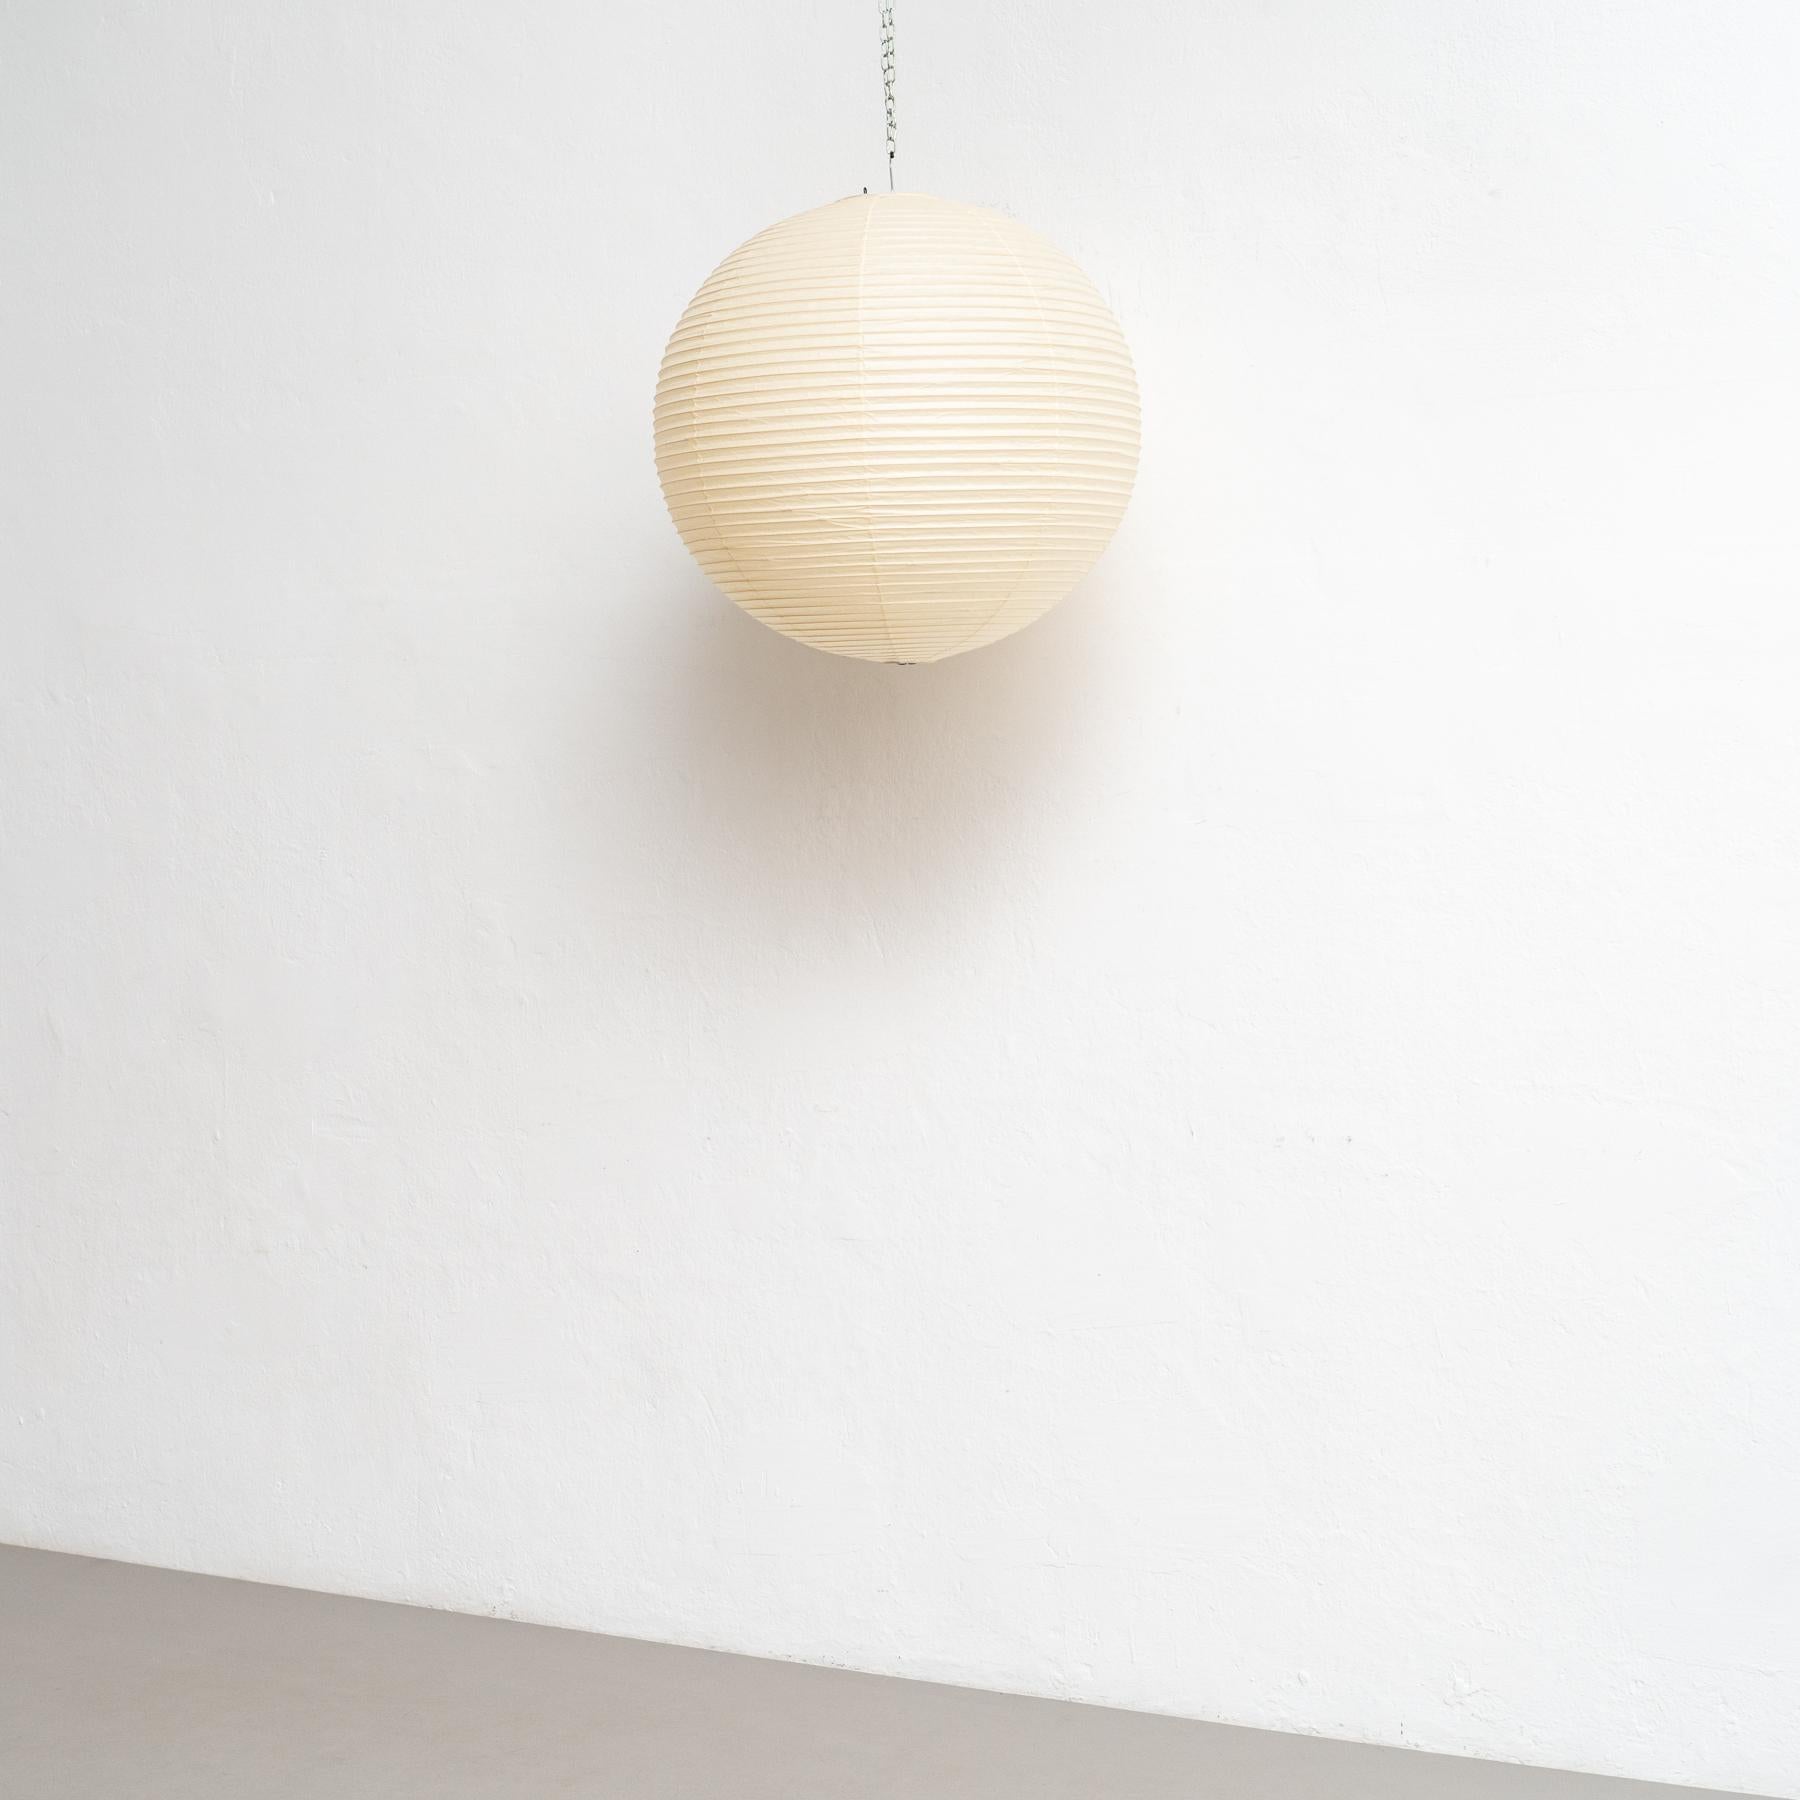 Mid-Century Modern Isamu Noguchi Akari 55A lampe à suspension : L'Elegance Japonaise Timeless en vente